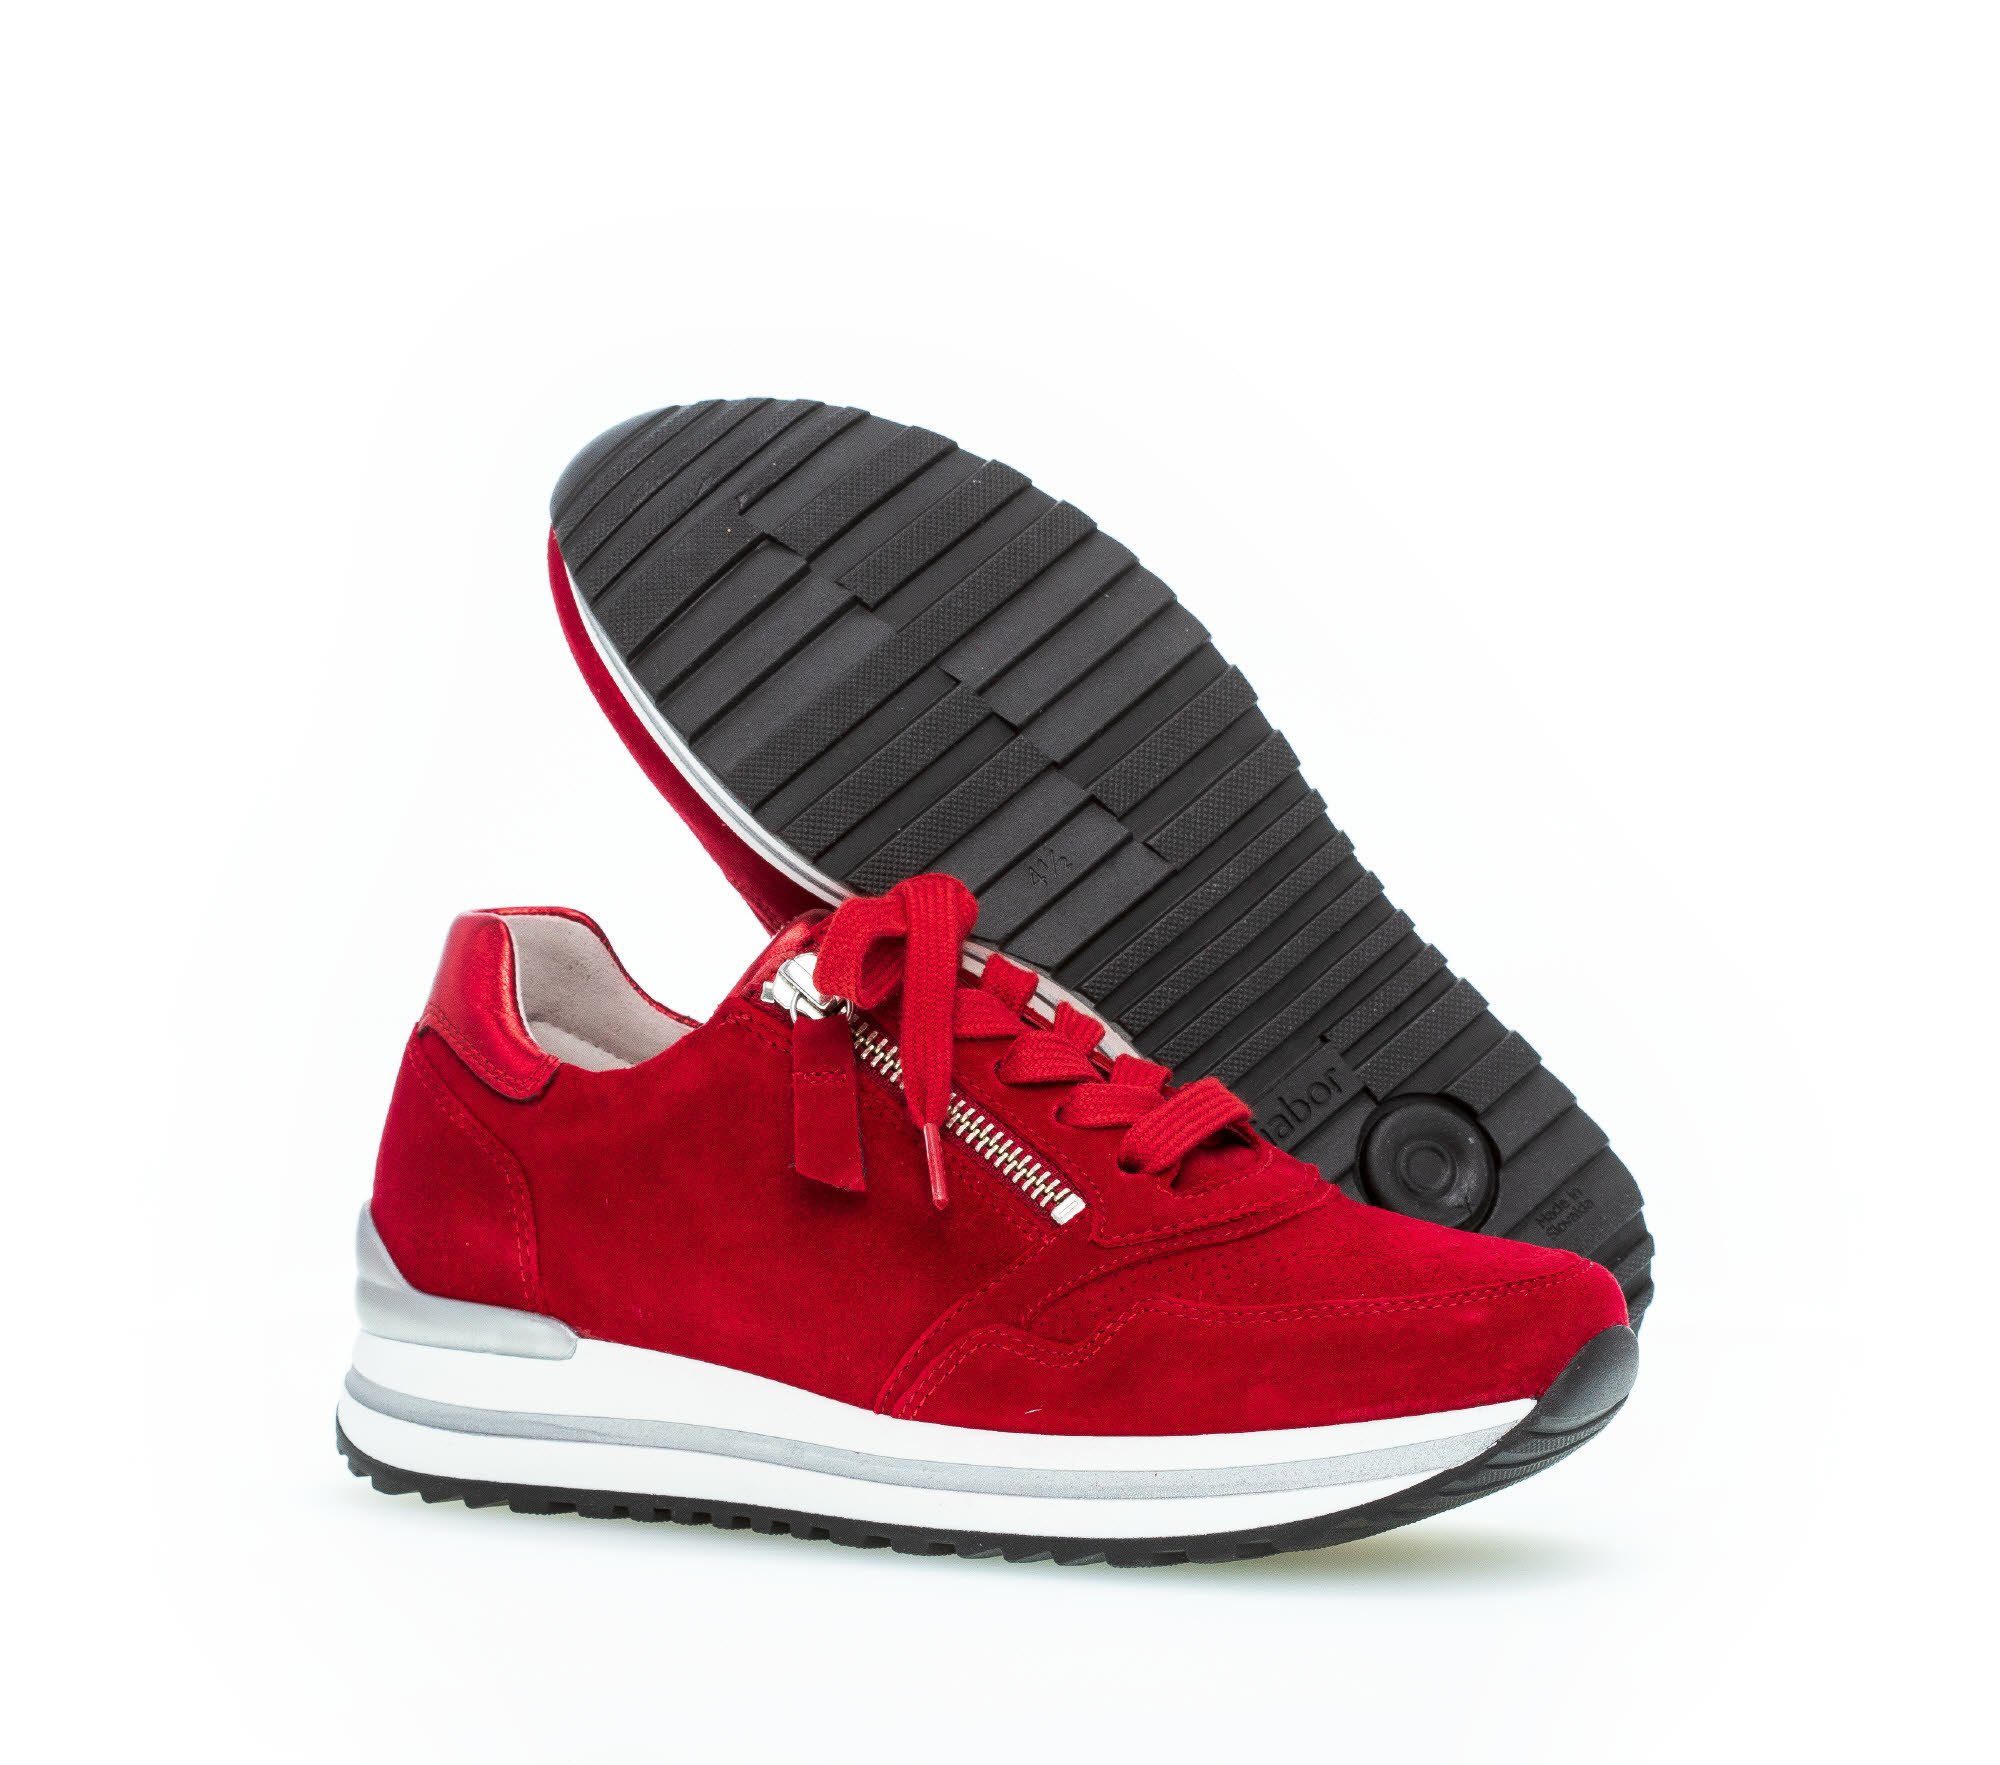 Rot Gabor (rubin.rosso) 86.528.68 Sneaker